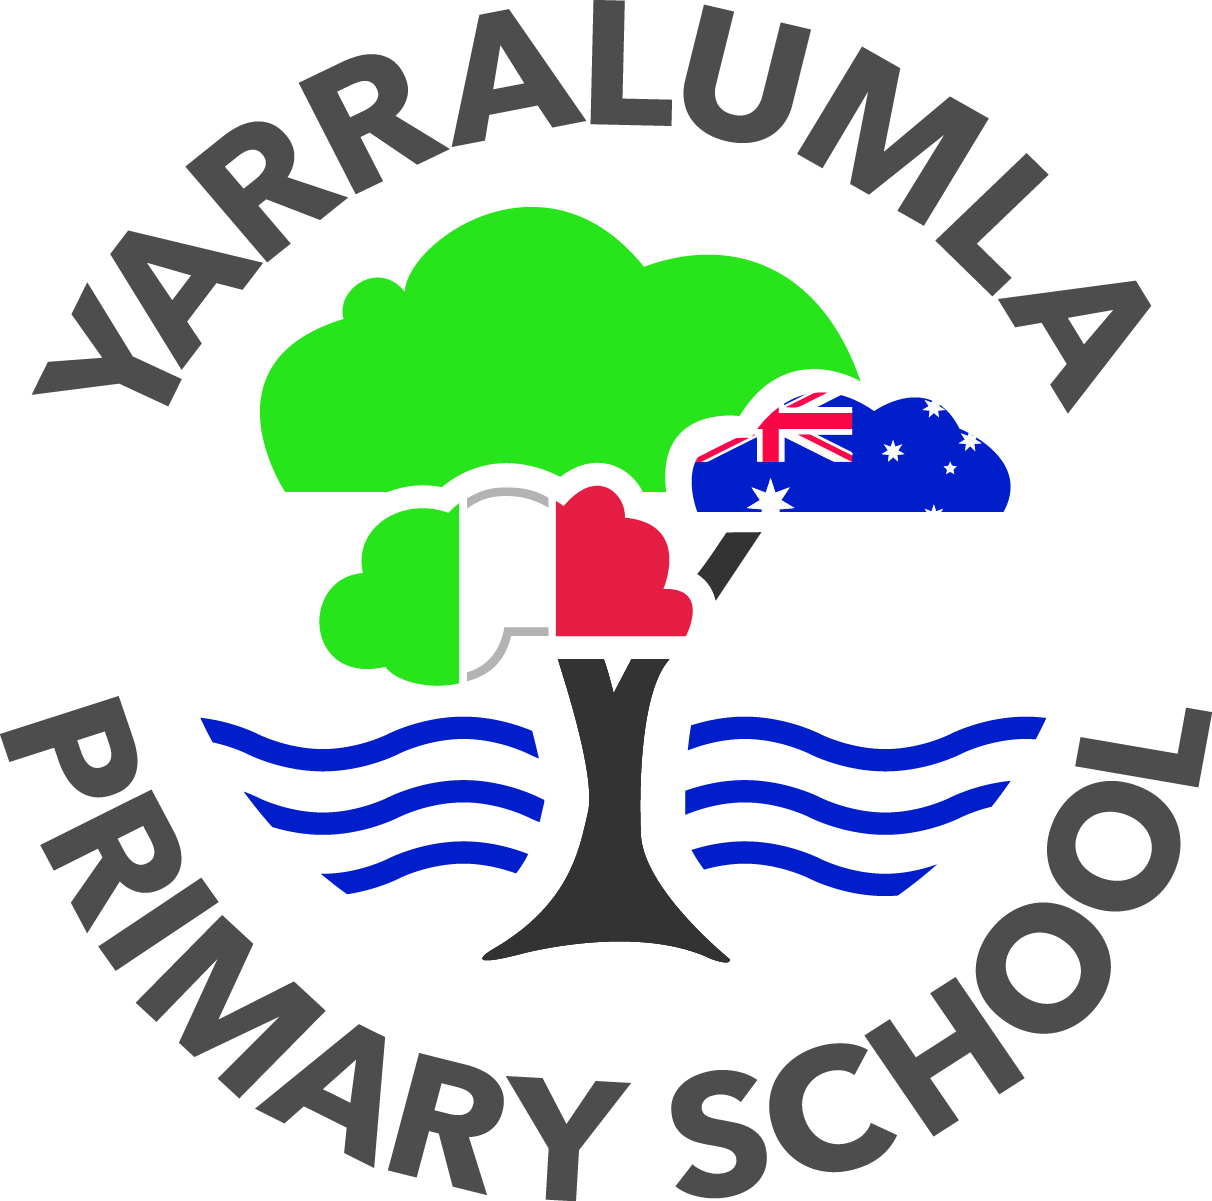 Yarralumla PS new logo